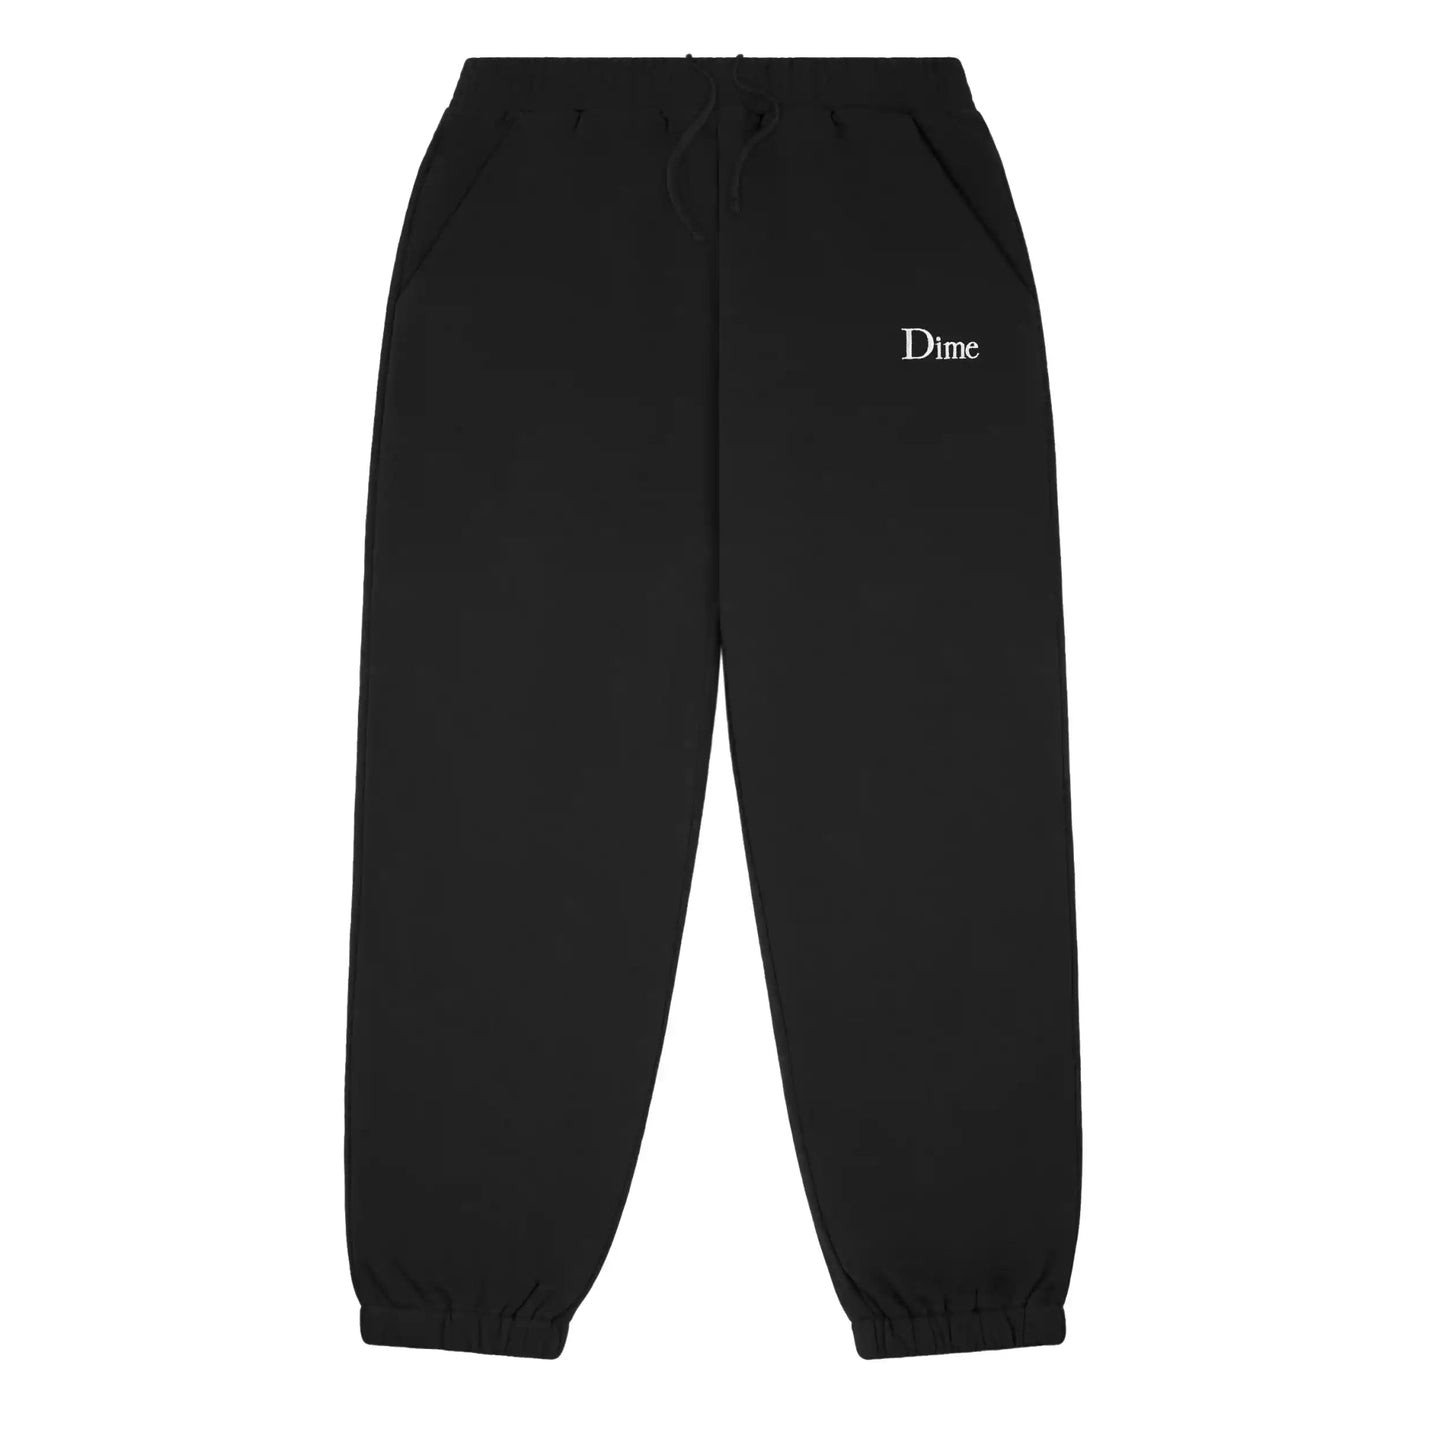 Dime Classic Small Logo Sweatpants, black - Tiki Room Skateboards - 1